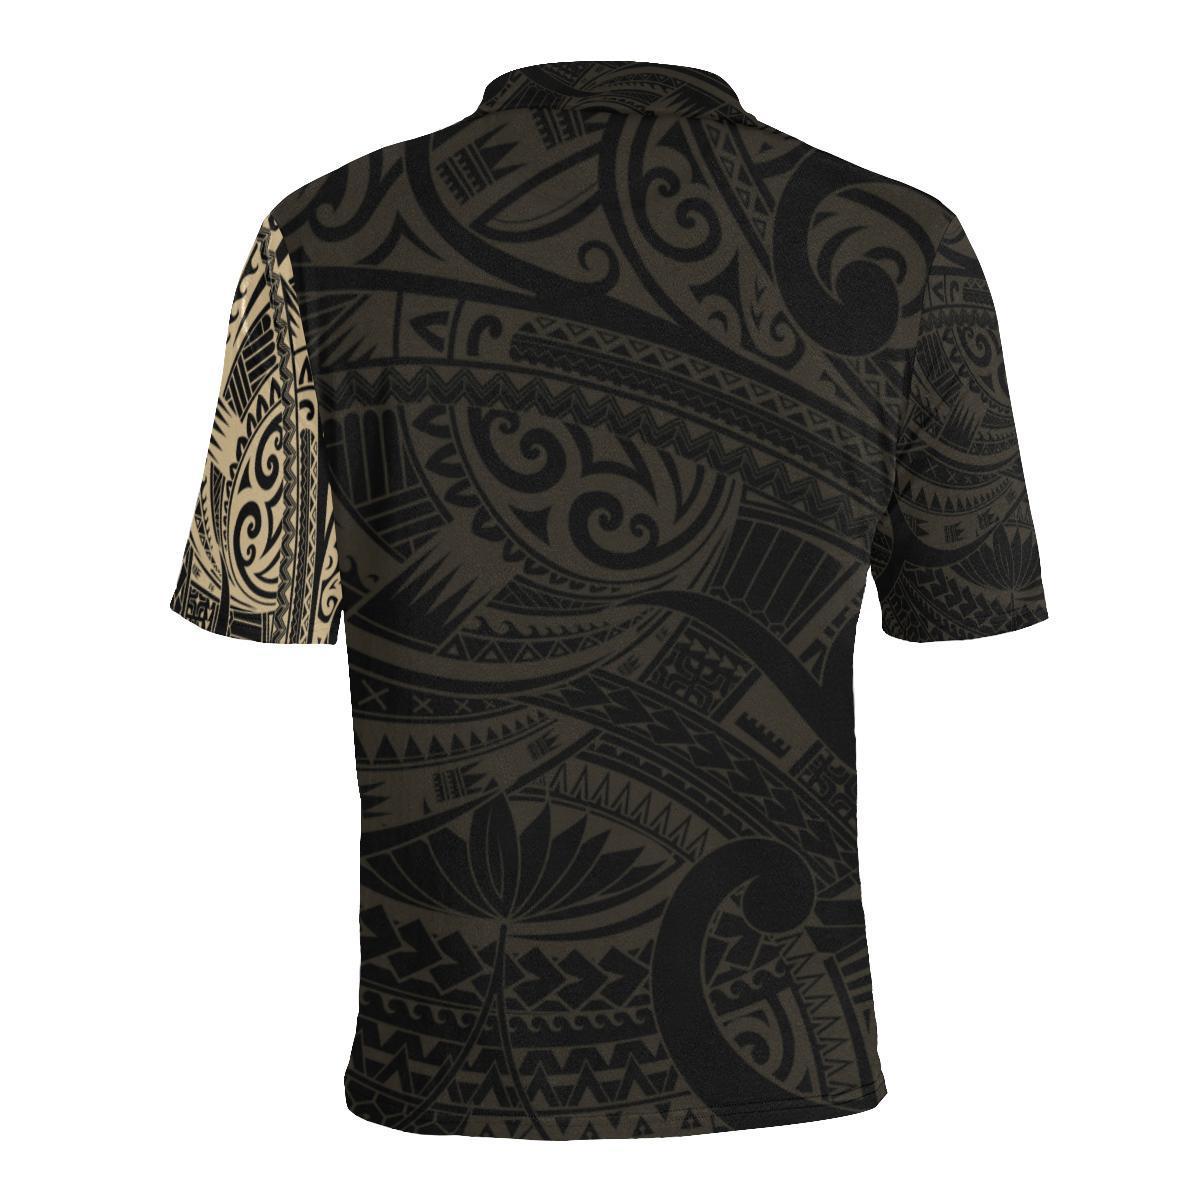 Maori Tattoo Style Golden Polo T Shirt - TattoosCafe